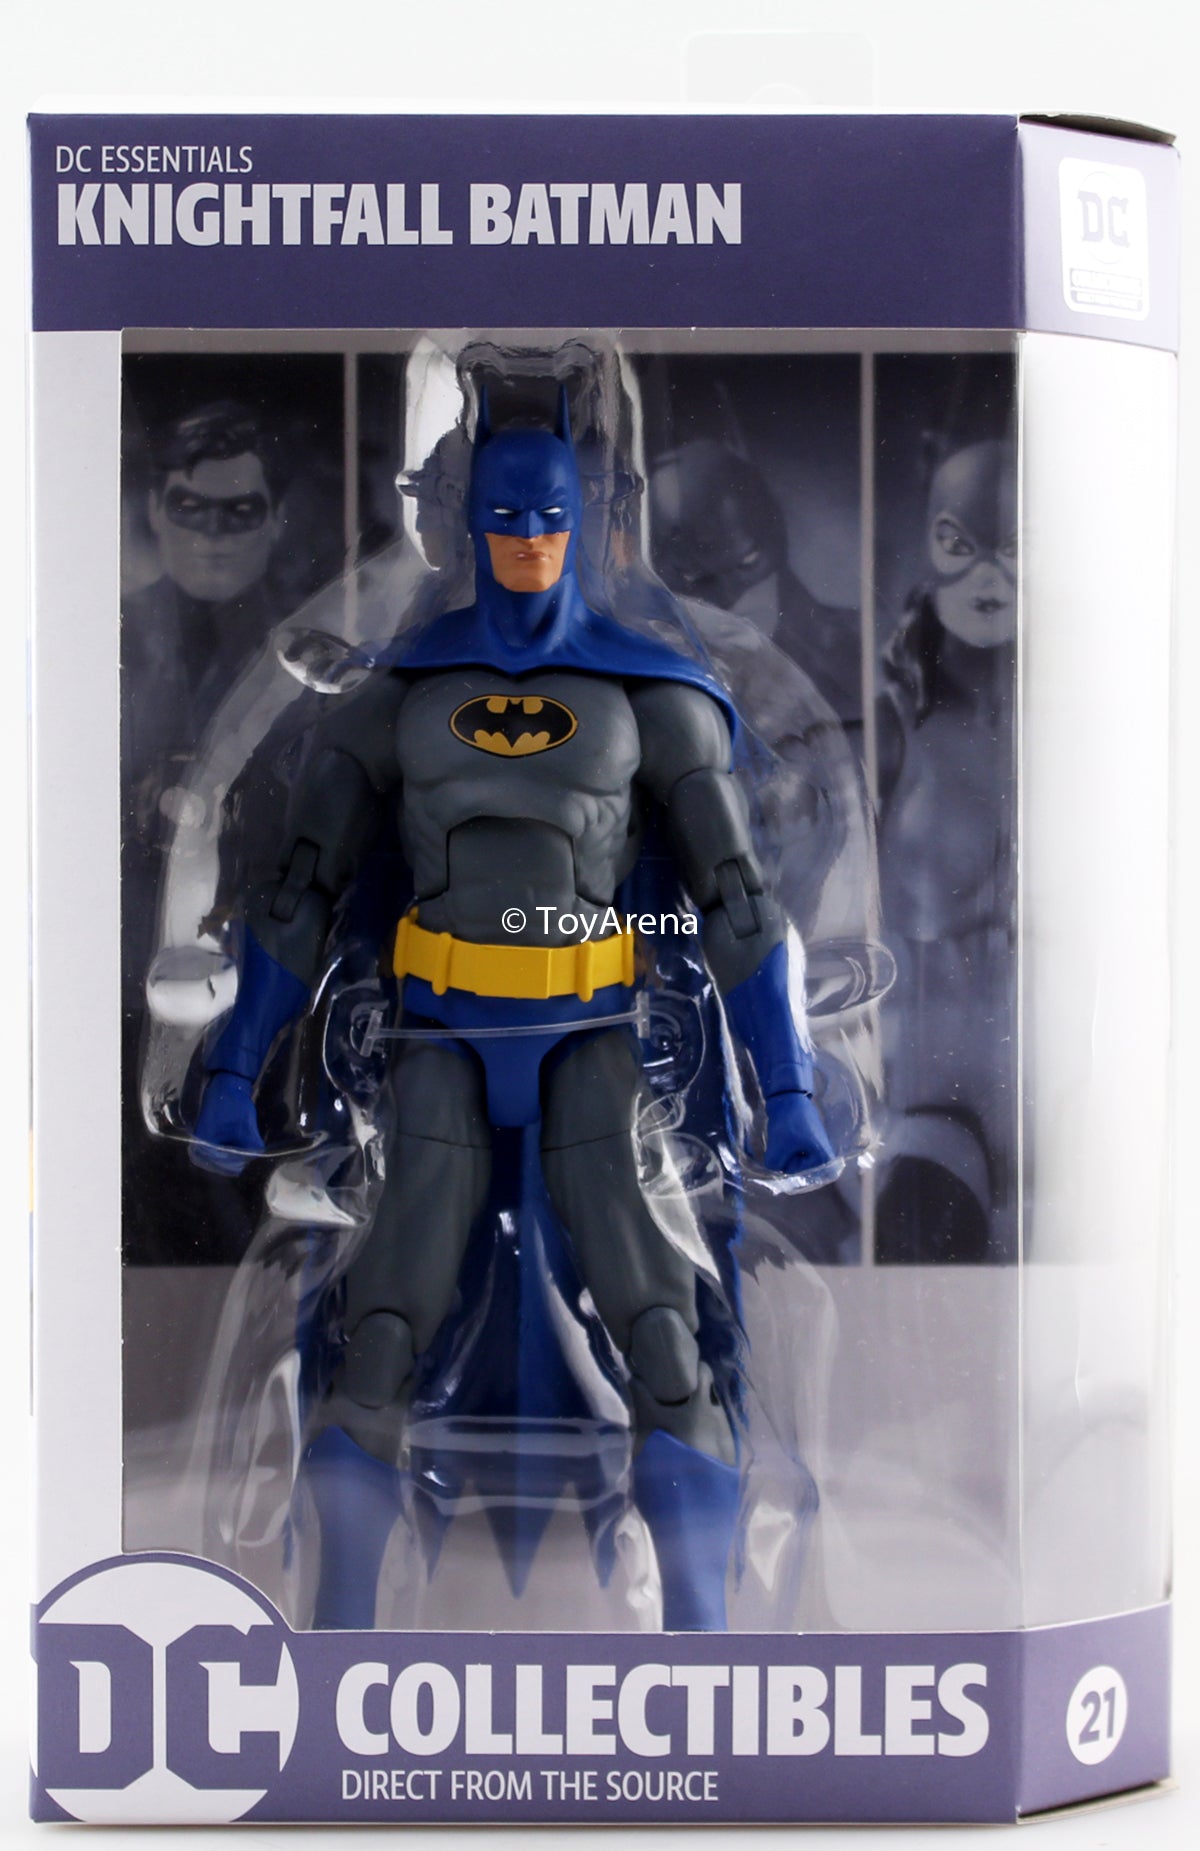 DC Collectibles DC Essentials Knightfall Batman Action Figure 1